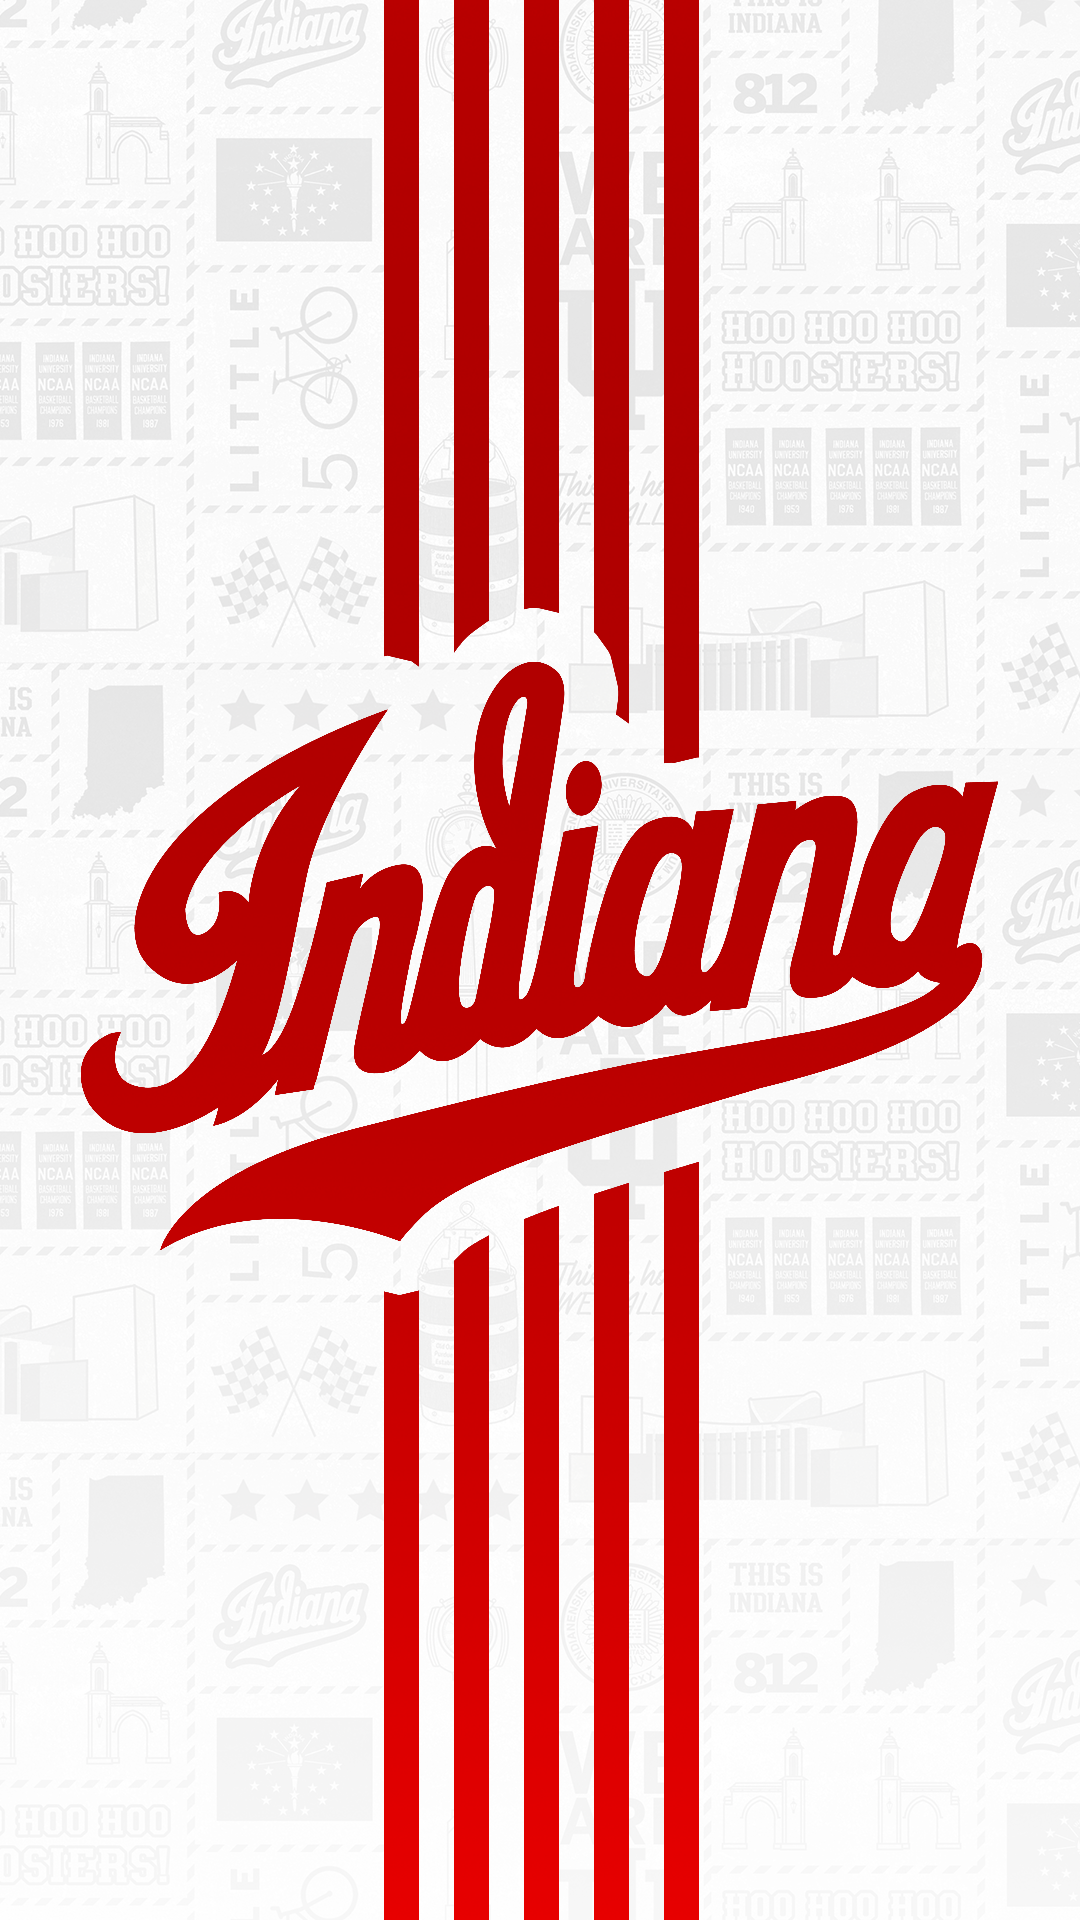 IU Hoosiers Logo - Phone Wallpapers - Indiana University Athletics